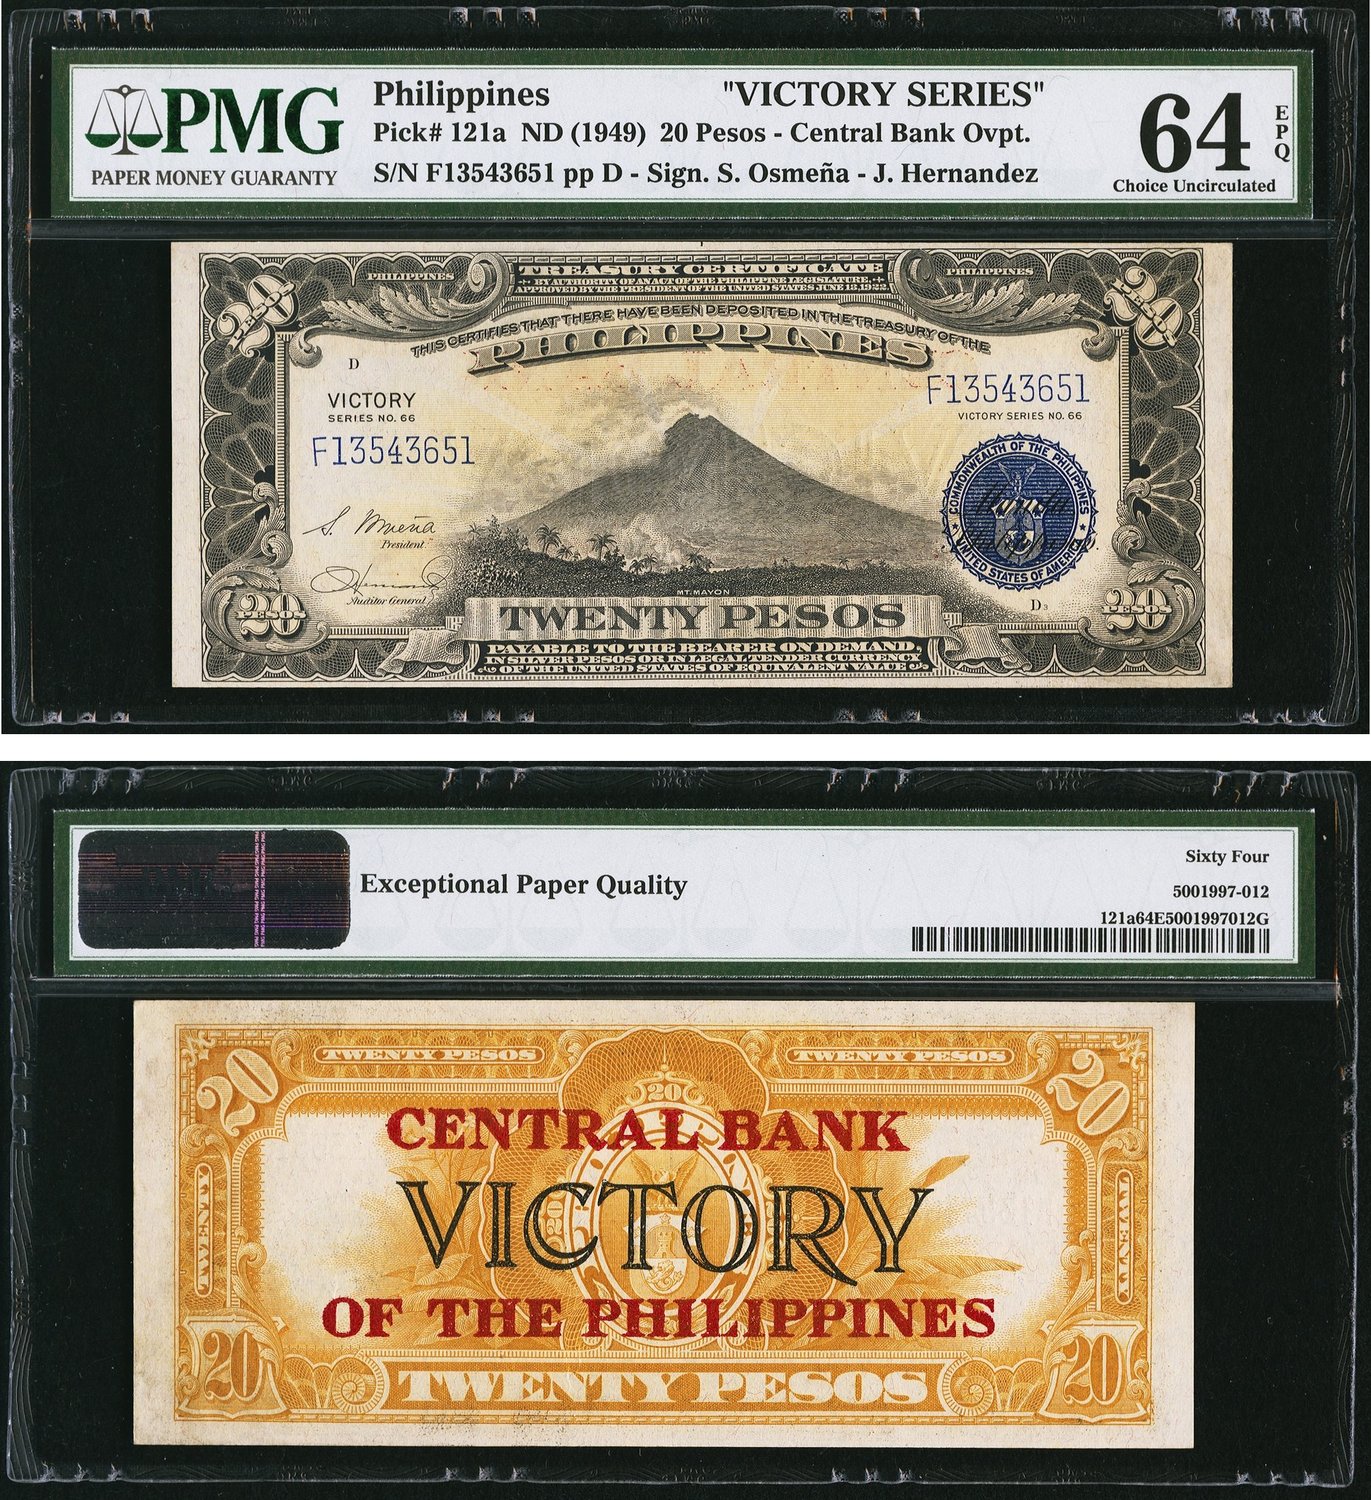 crispy uncirculated beautiful VICTORY 1 peso 1944 note